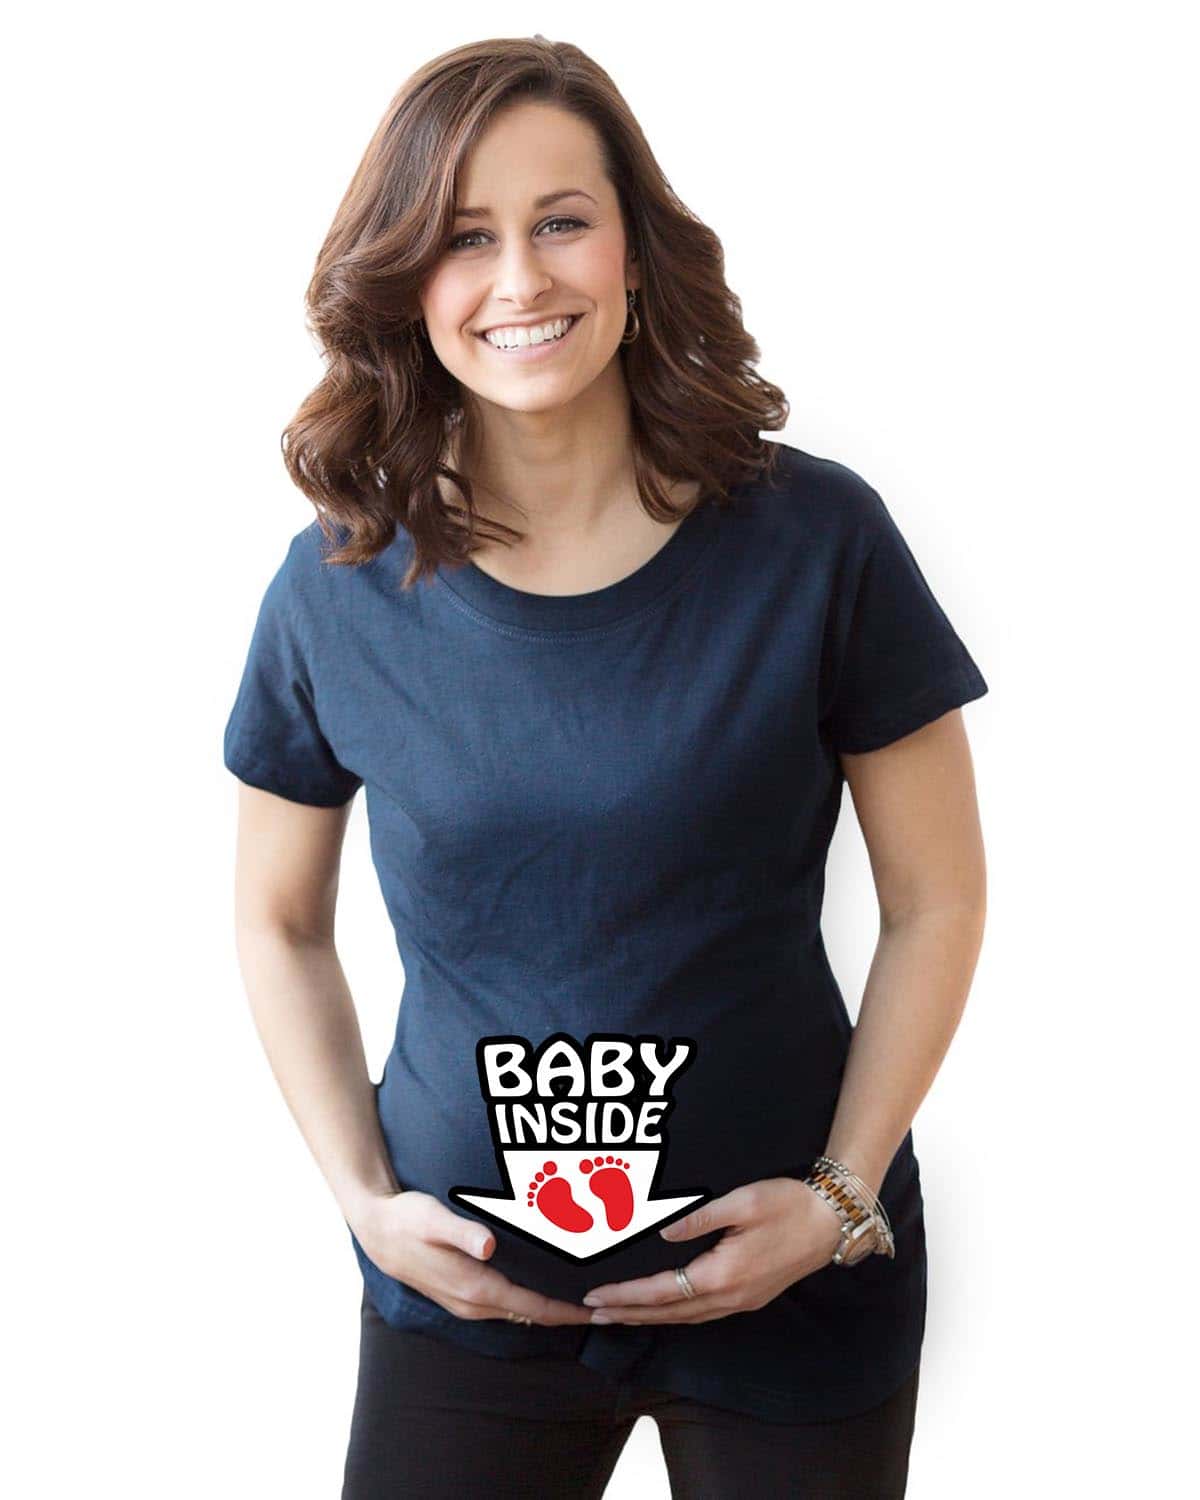 Baby Inside maternity tshirt